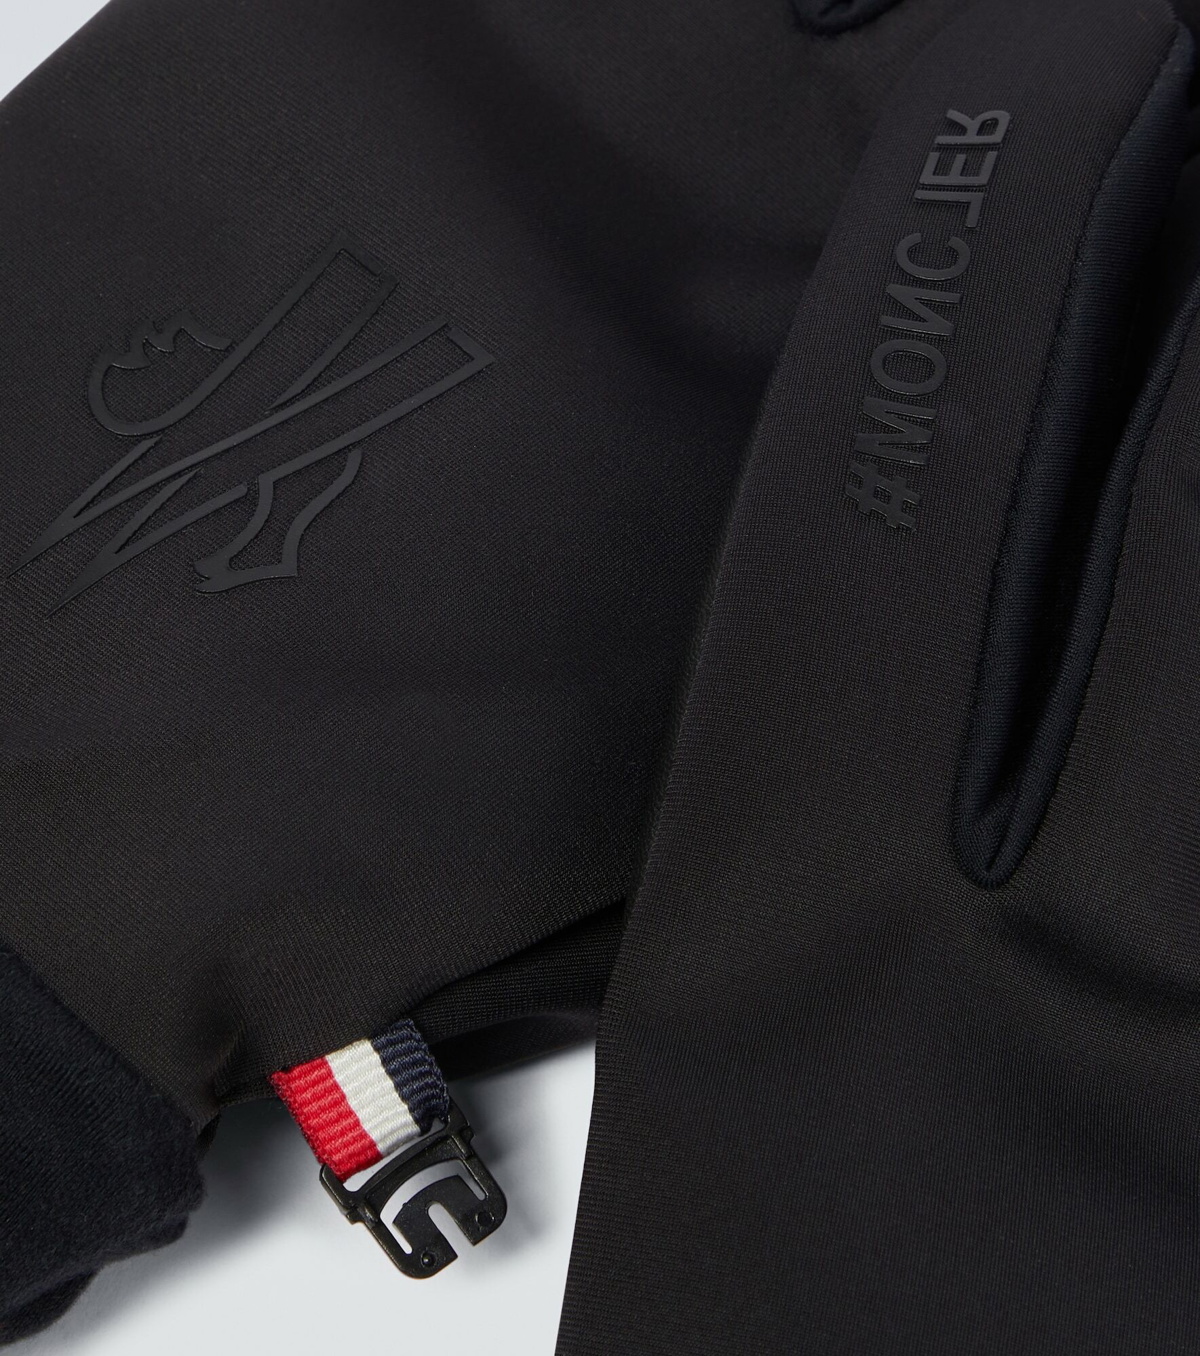 Moncler Grenoble - Technical nylon and leather gloves Moncler Grenoble